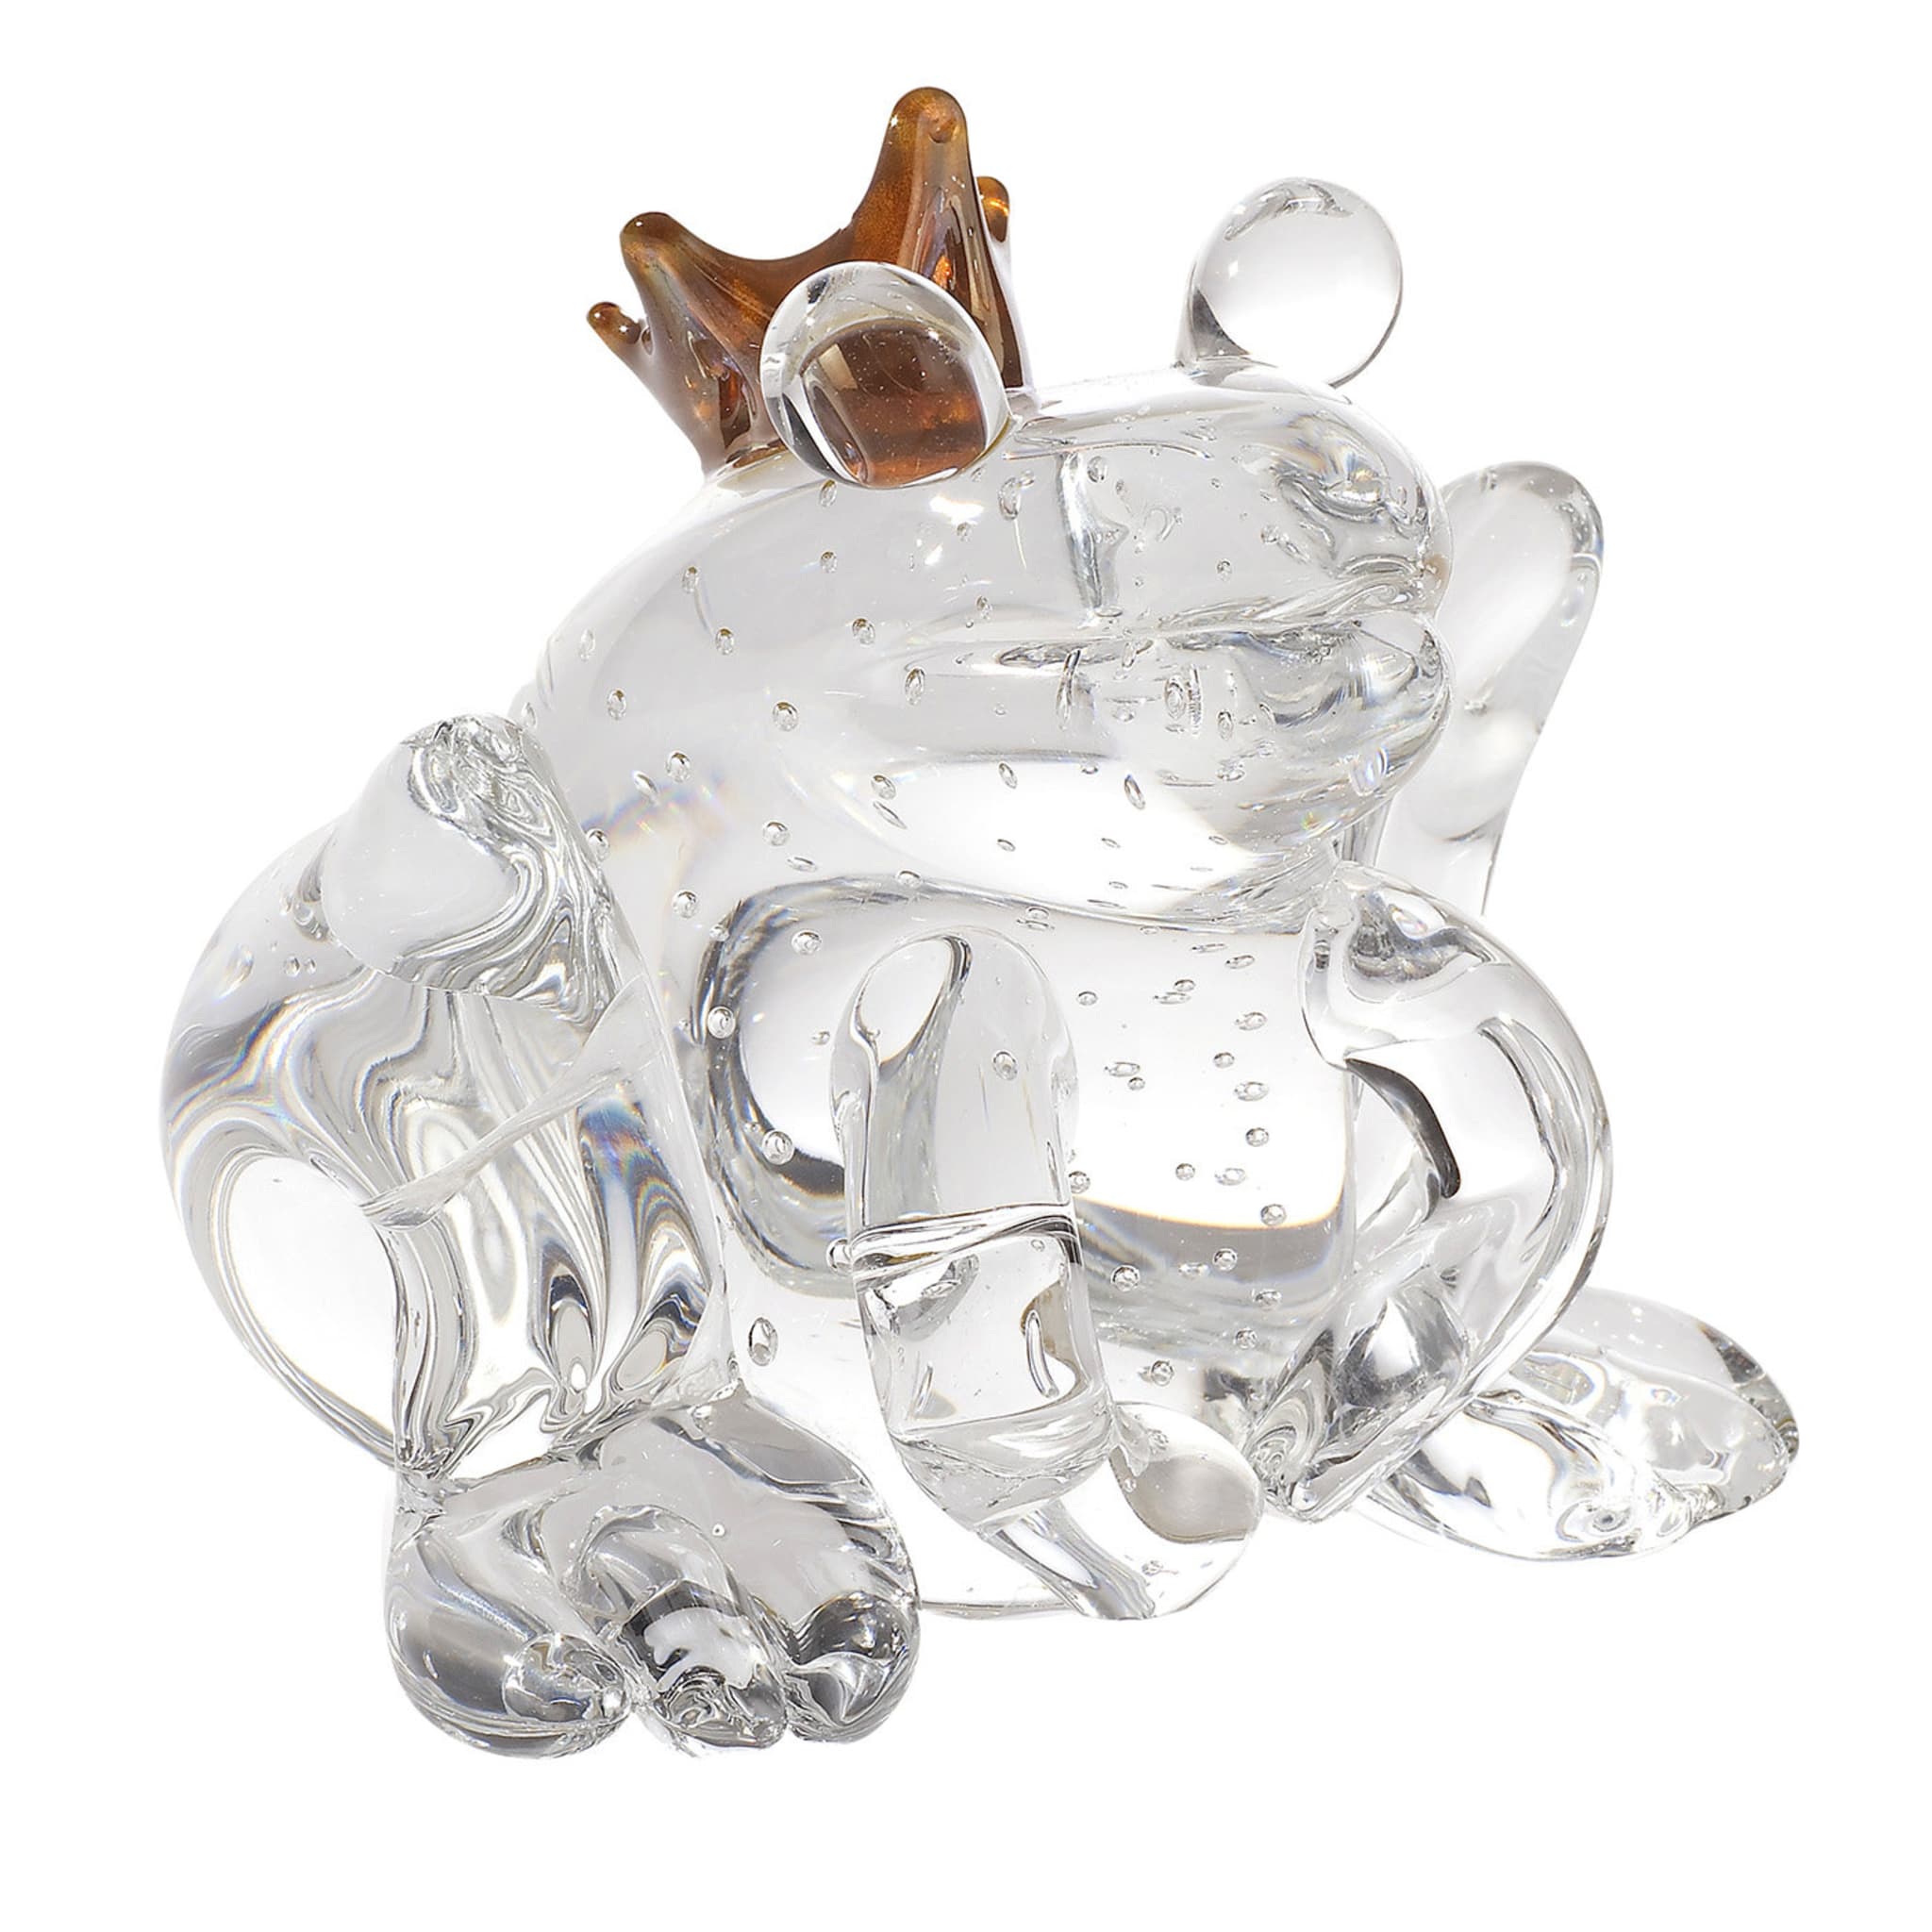 Le prince grenouille Figurine en verre transparent - Vue principale